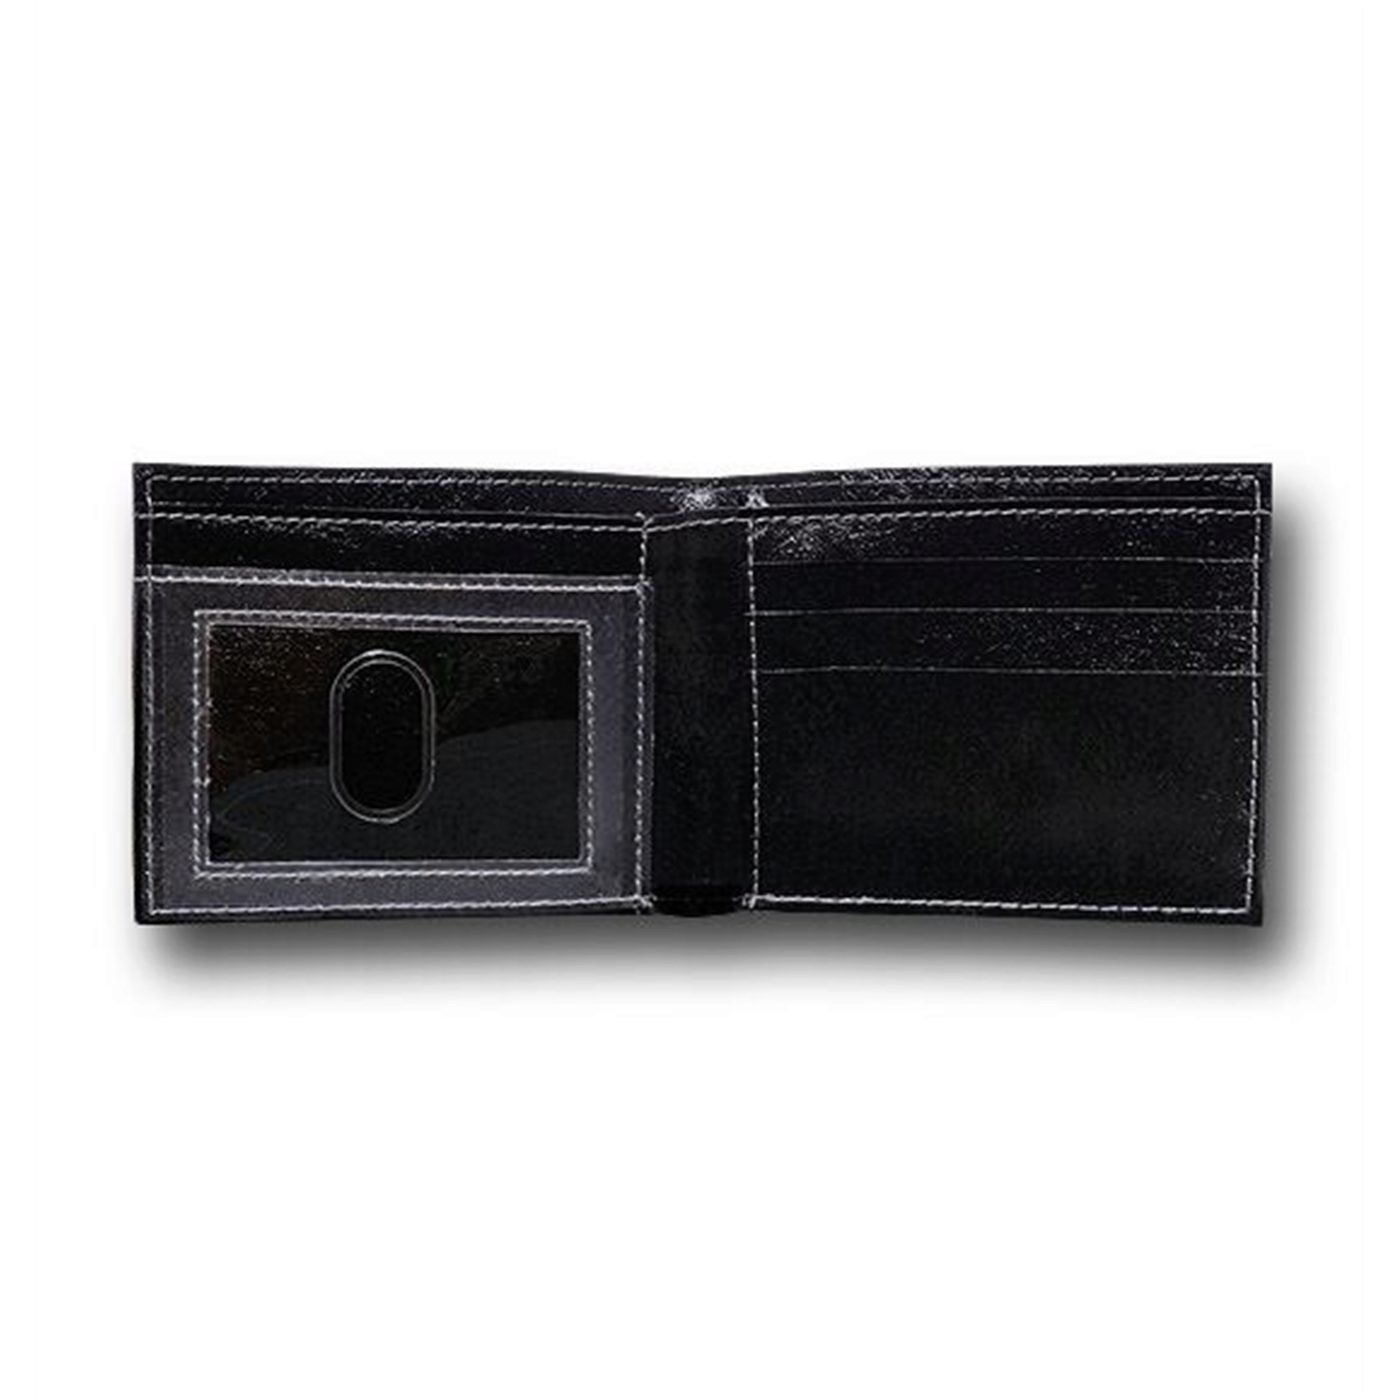 Batman Symbol Rubber Bi-Fold Wallet